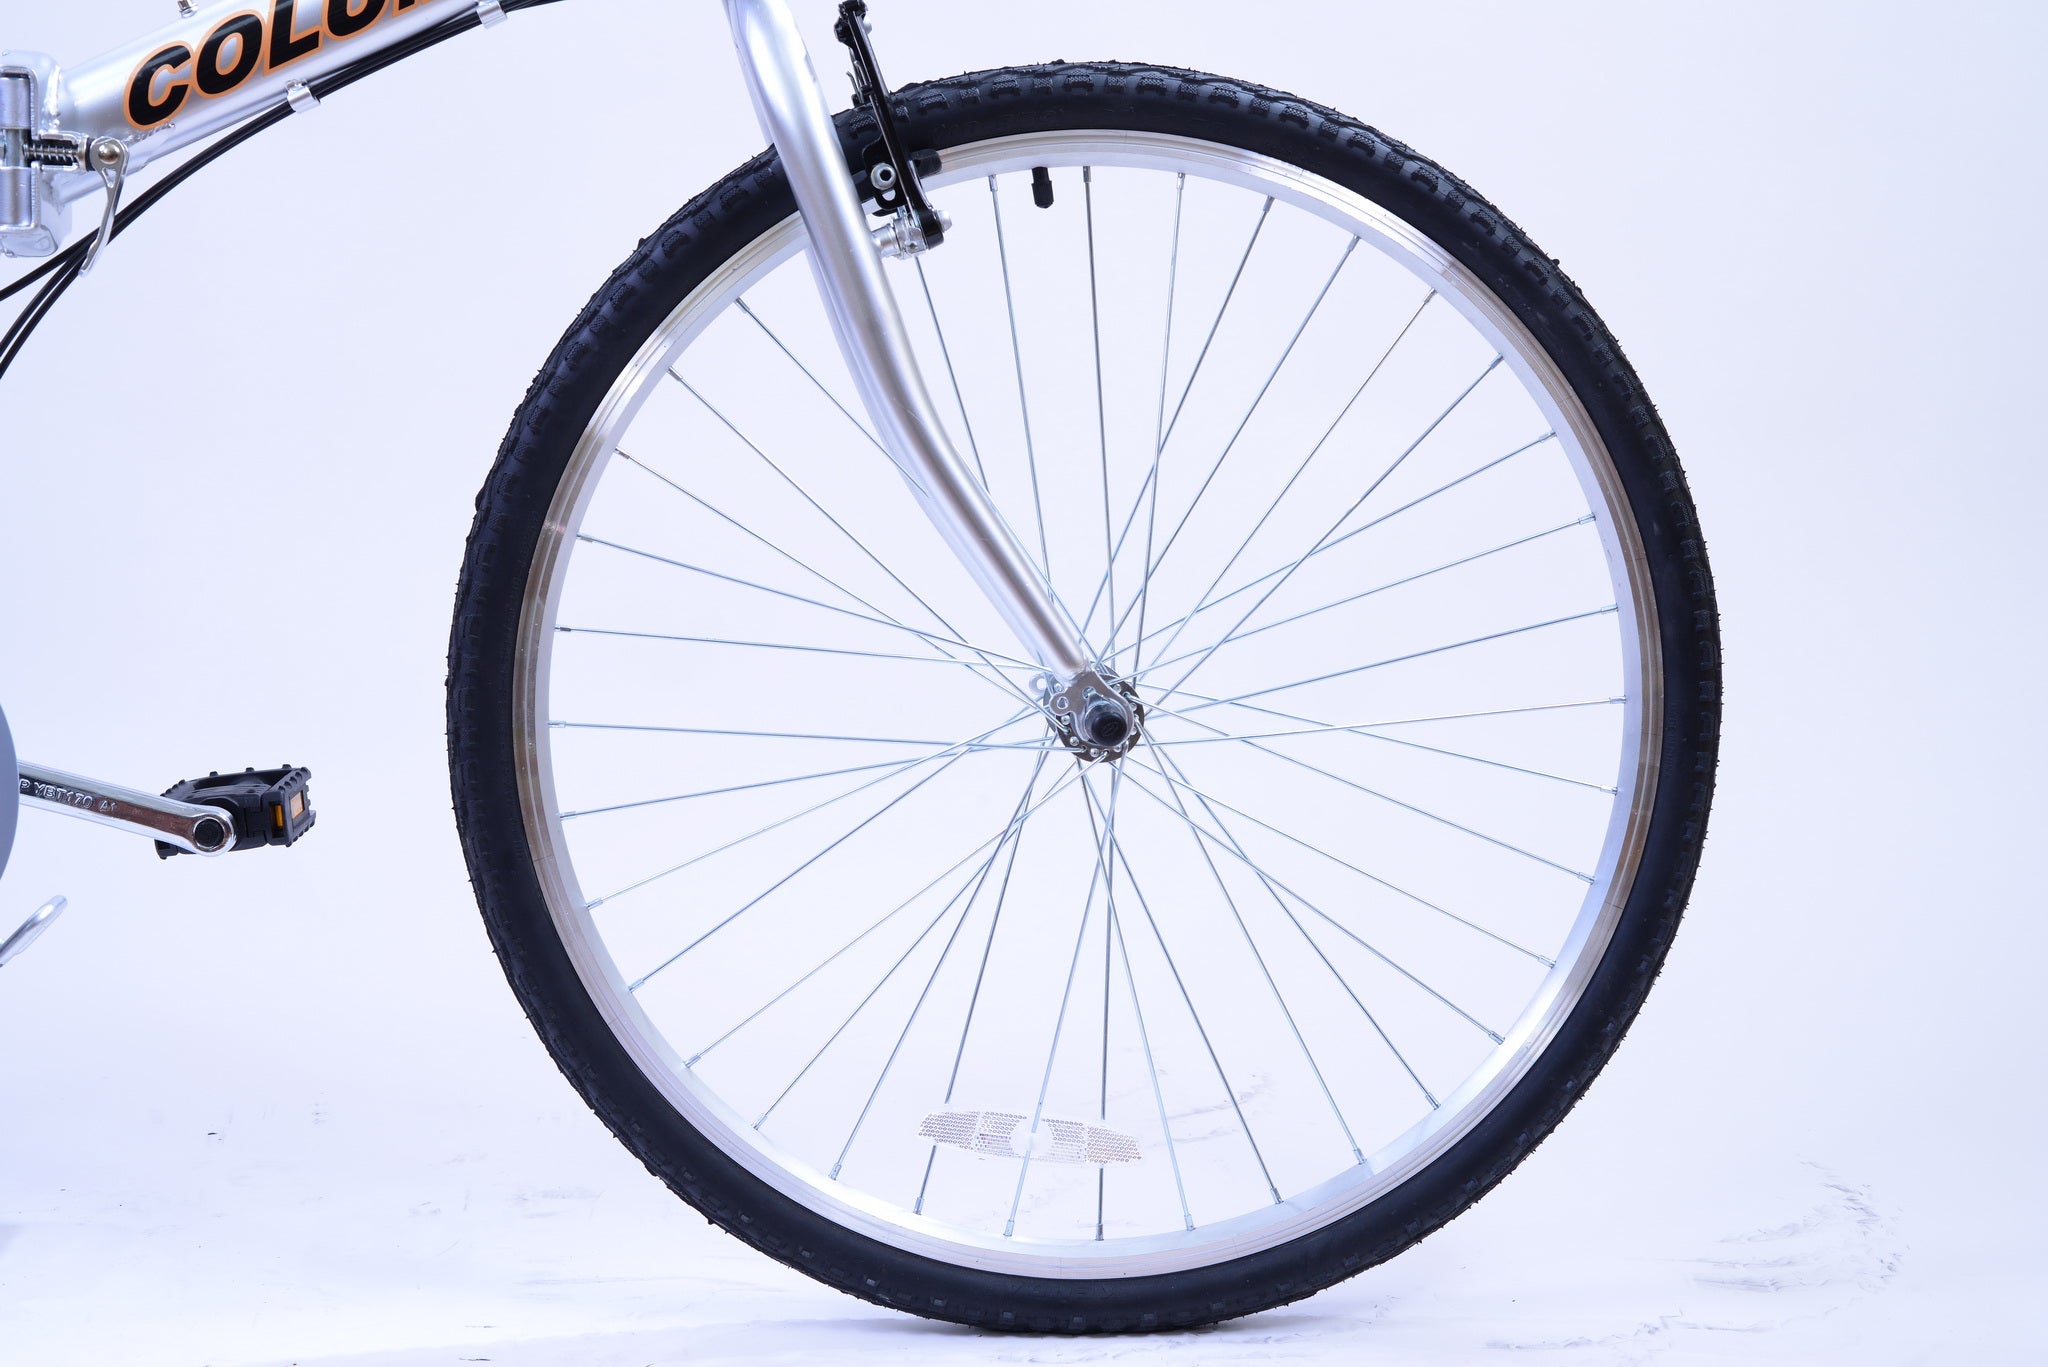 Bike wheel with silver rims.